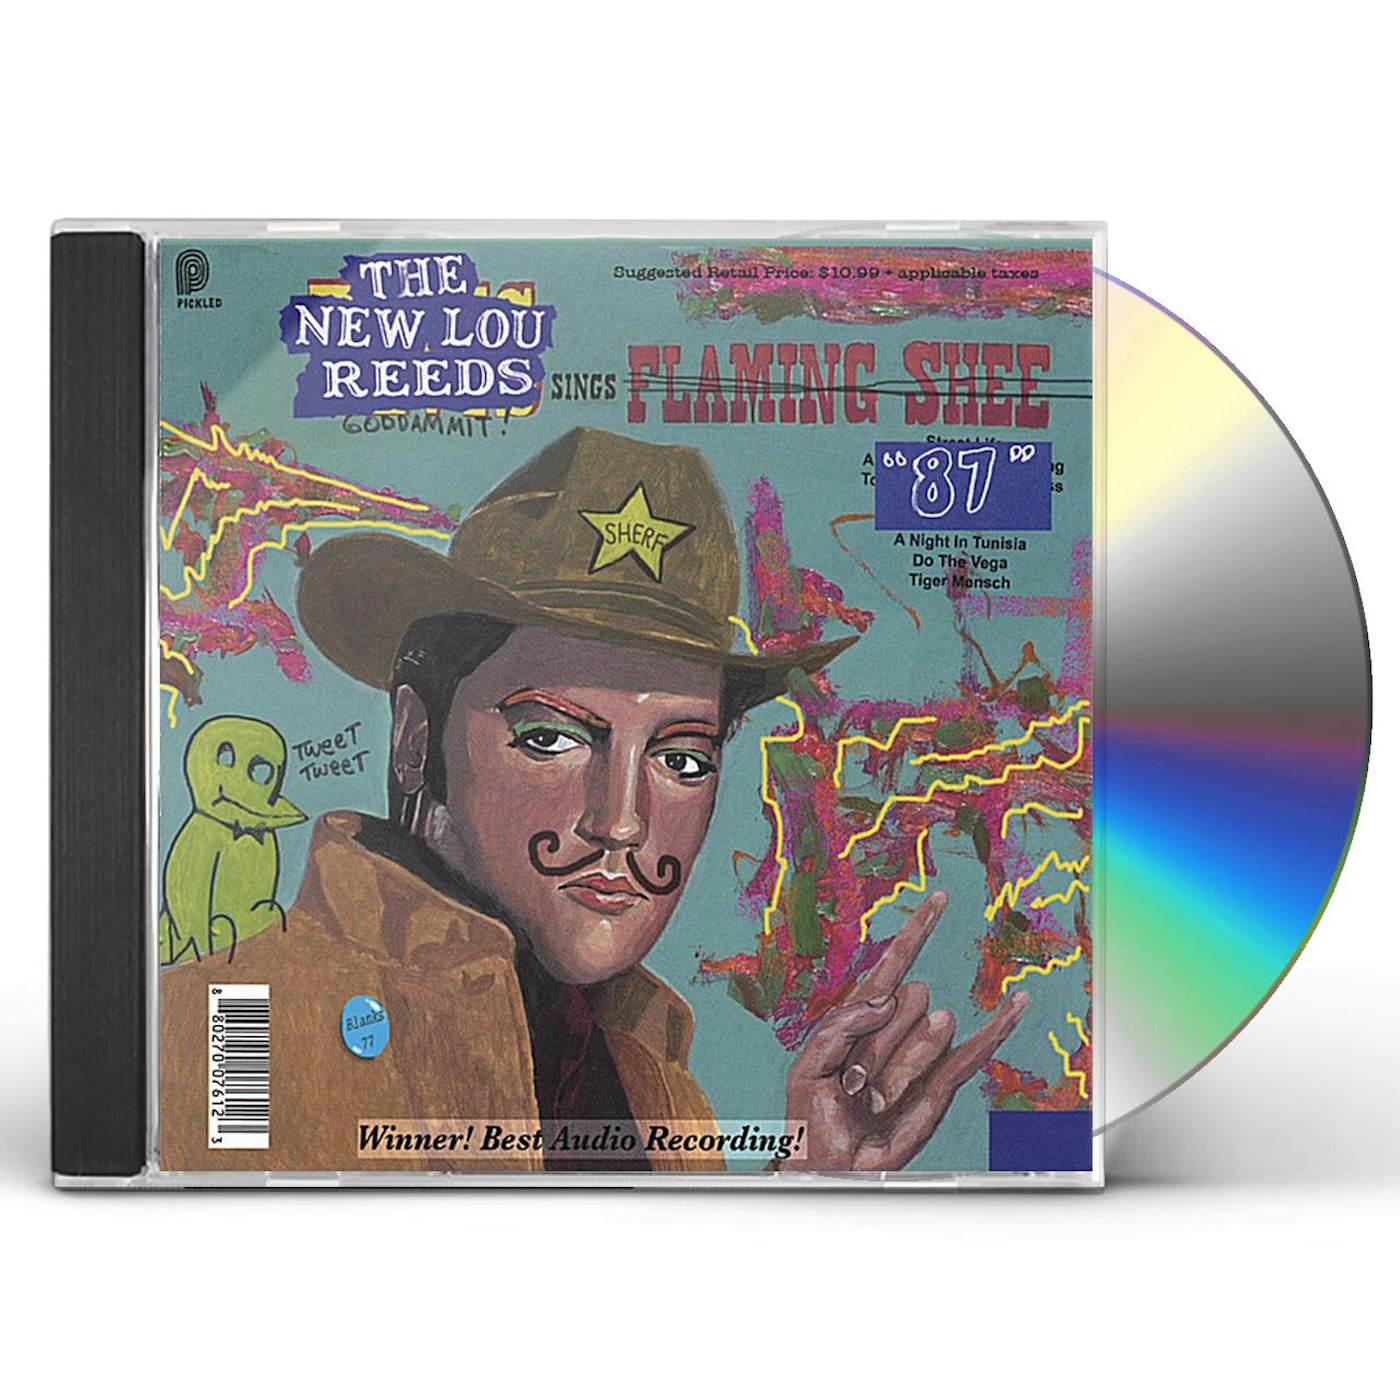 The New Lou Reeds TOP BILLIN CD